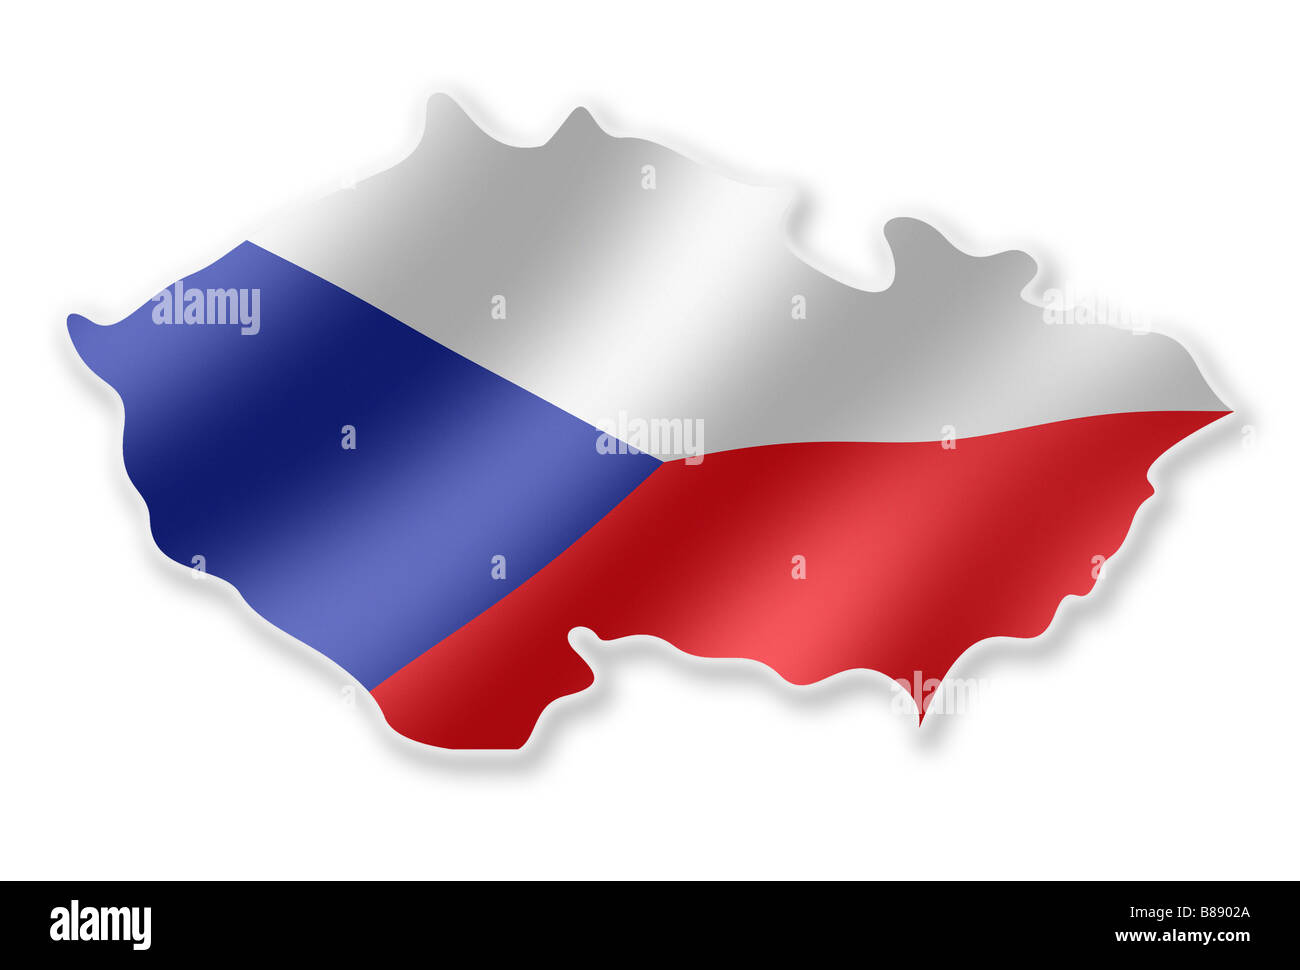 Czech Republic Czechslovakia Prague Country Map Outline With National Flag Inside Stock Photo